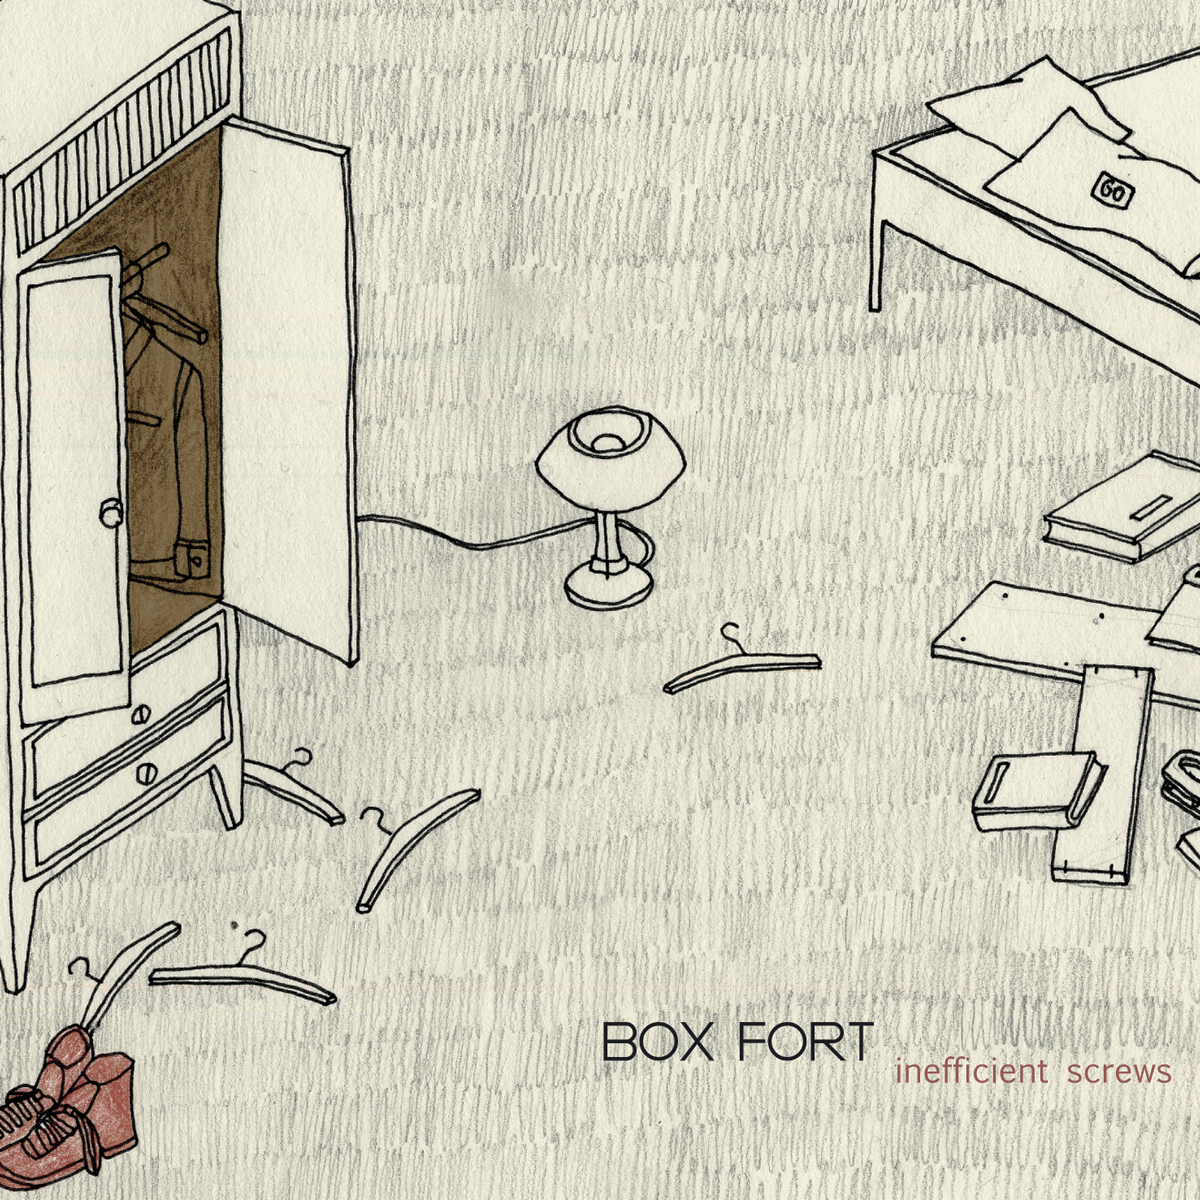 Inefficient Screws – Box Fort